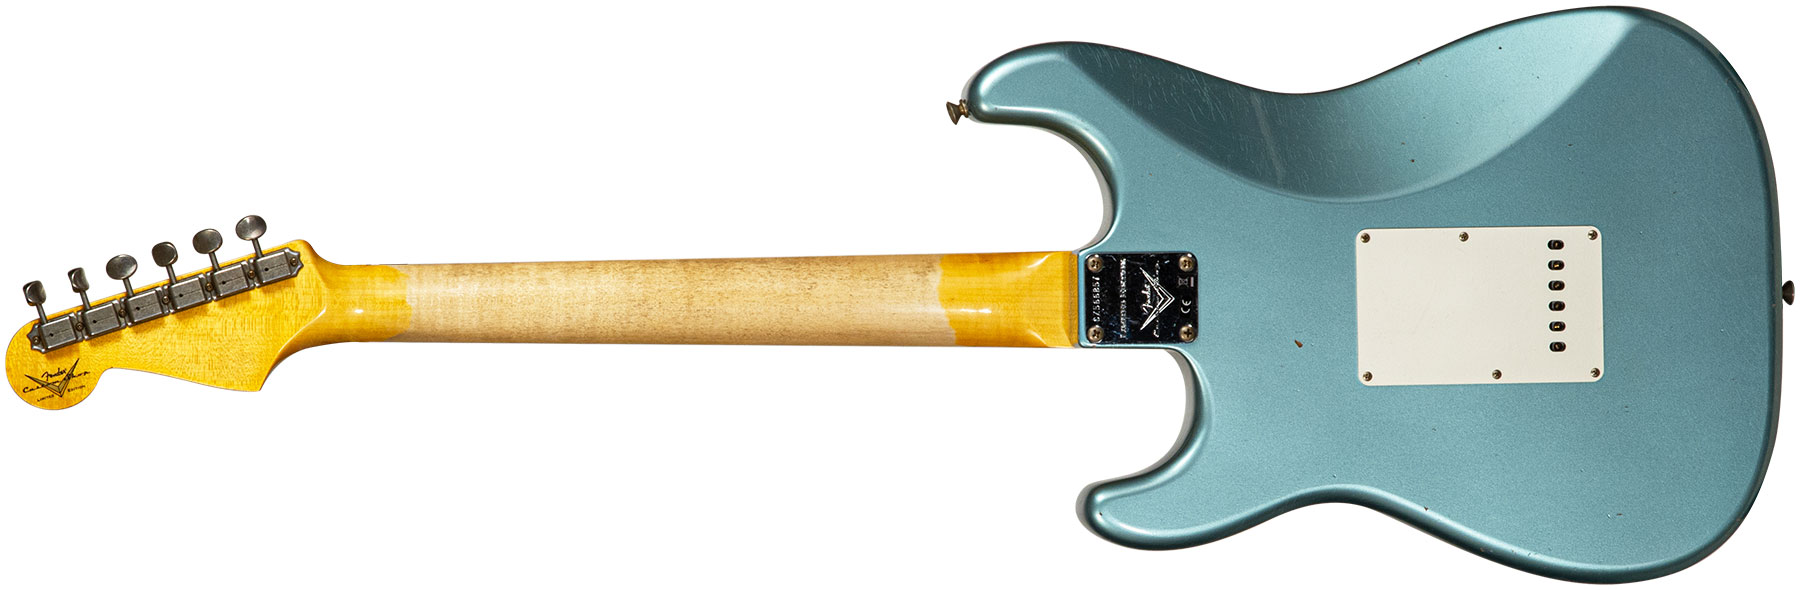 Fender Custom Shop Strat 1959 3s Trem Rw #cz566857 - Journeyman Relic Teal Green Metallic - Guitarra eléctrica con forma de str. - Variation 1